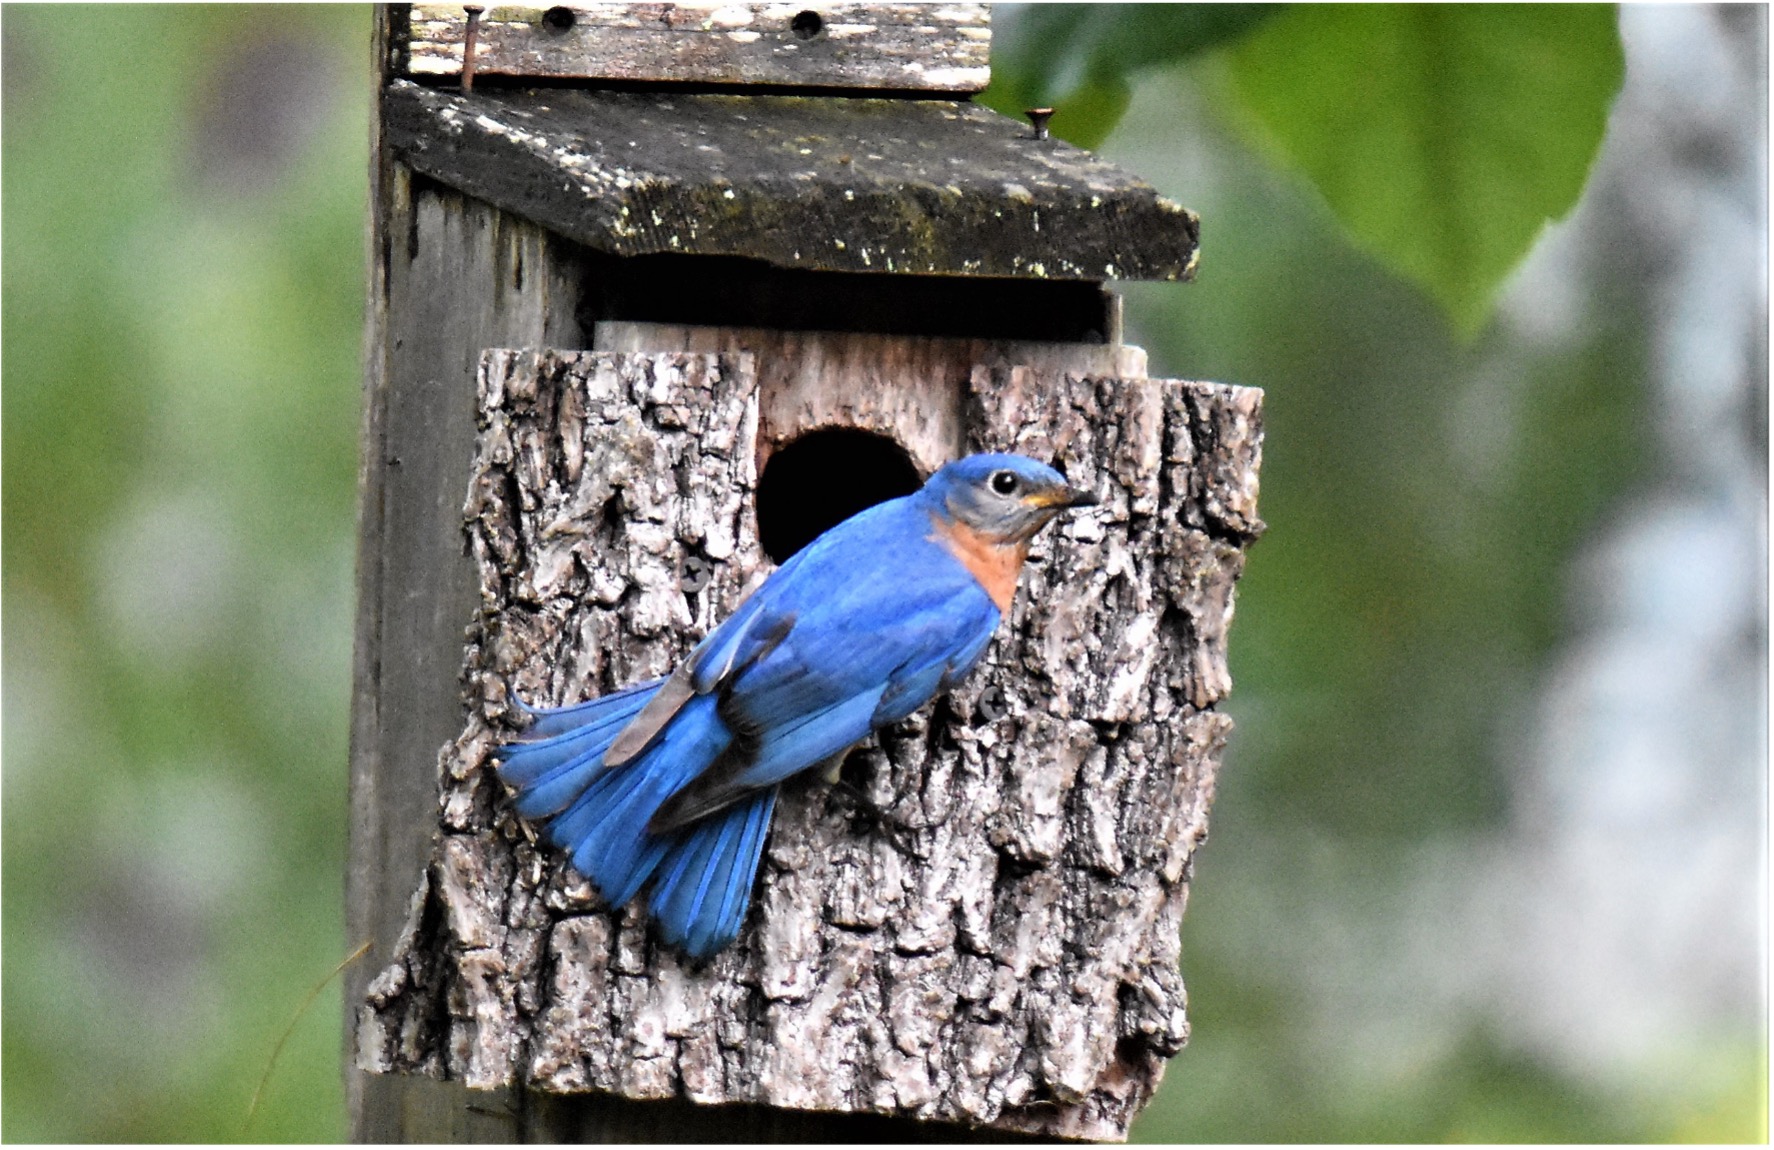 Male Eastern Bluebird on nest box with bark, photo by Jerry Wayne Davis